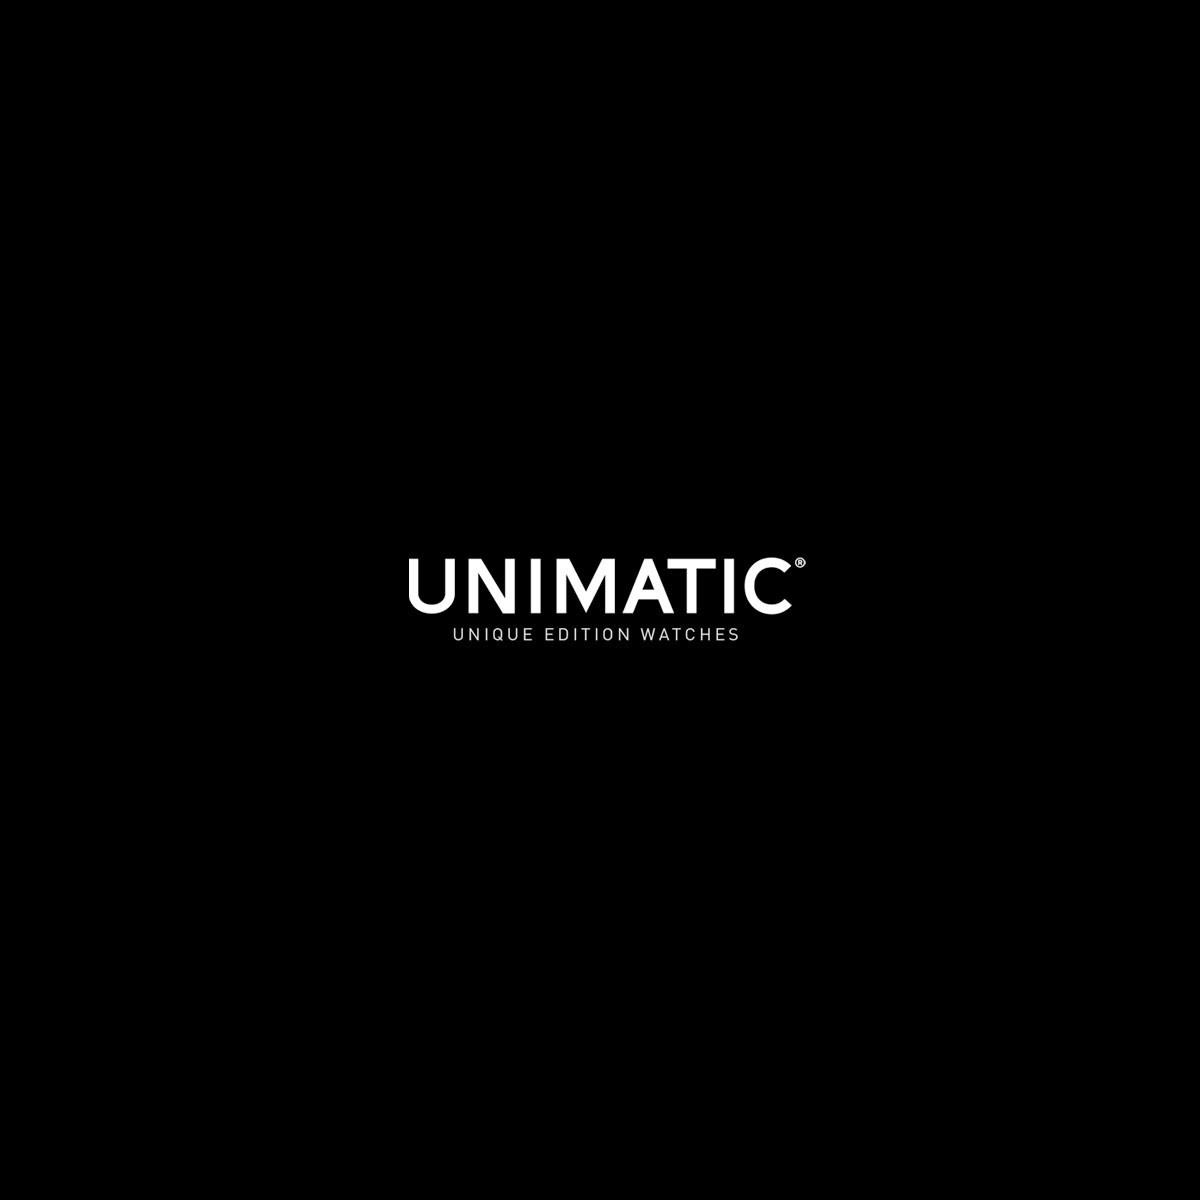 www.unimaticwatches.com